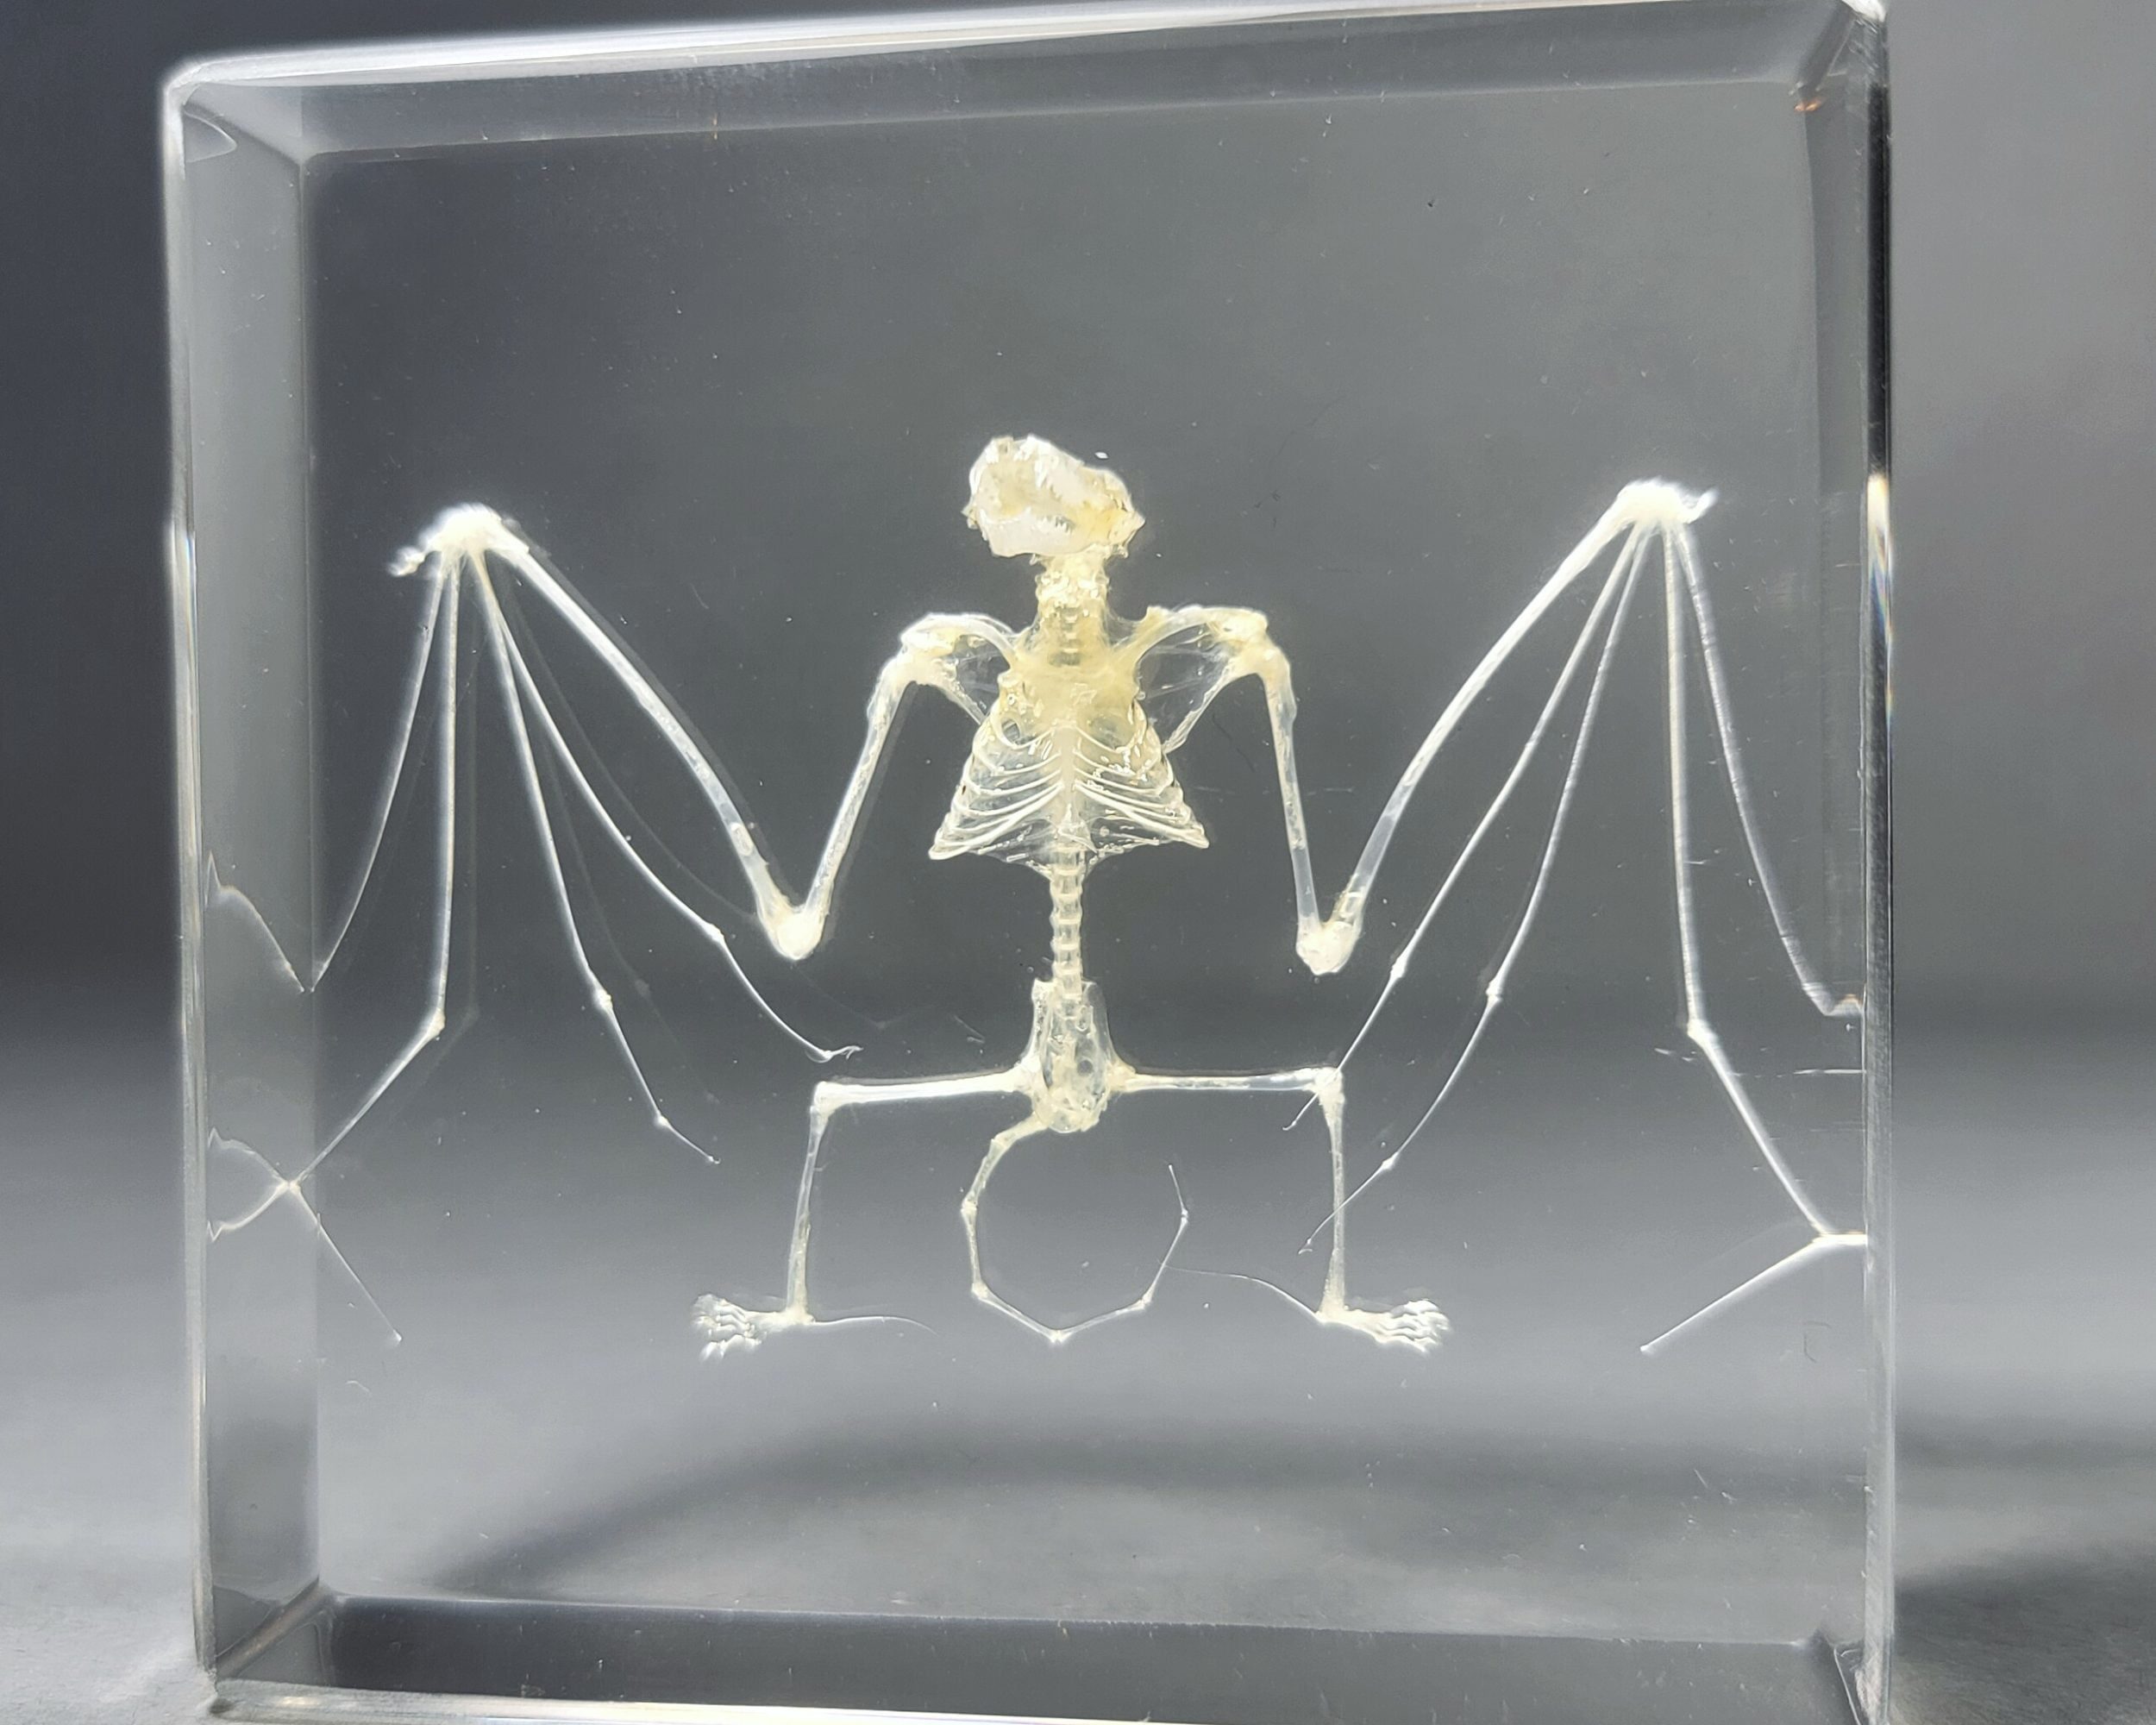 Real Bat Skeleton In Resin, Bat Lucite Specimen